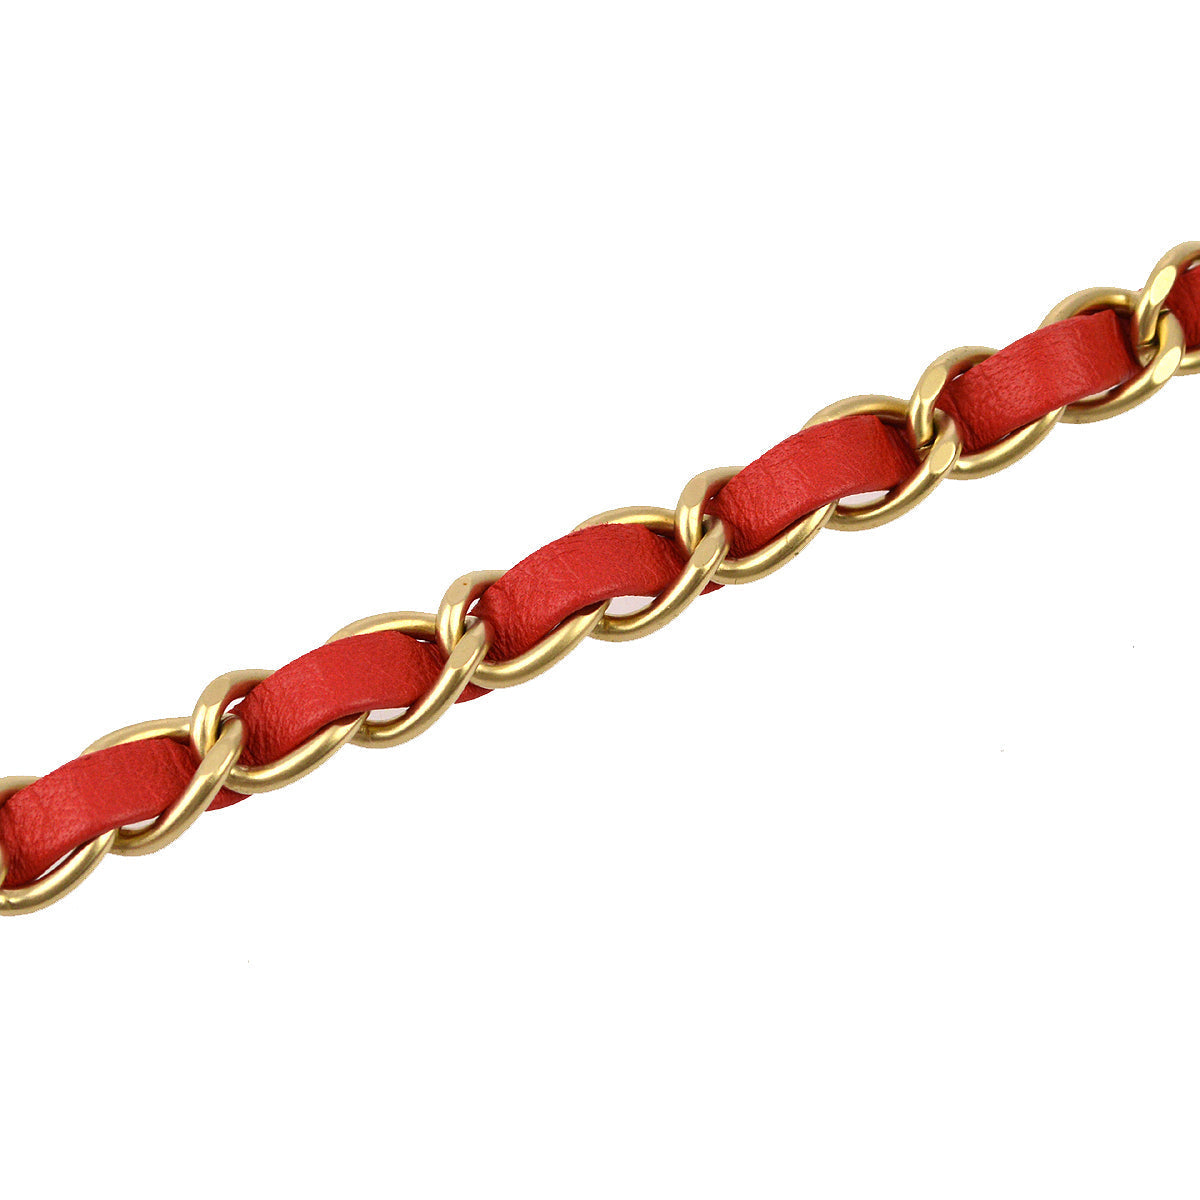 Chanel Red Lambskin Icon Chain Handbag